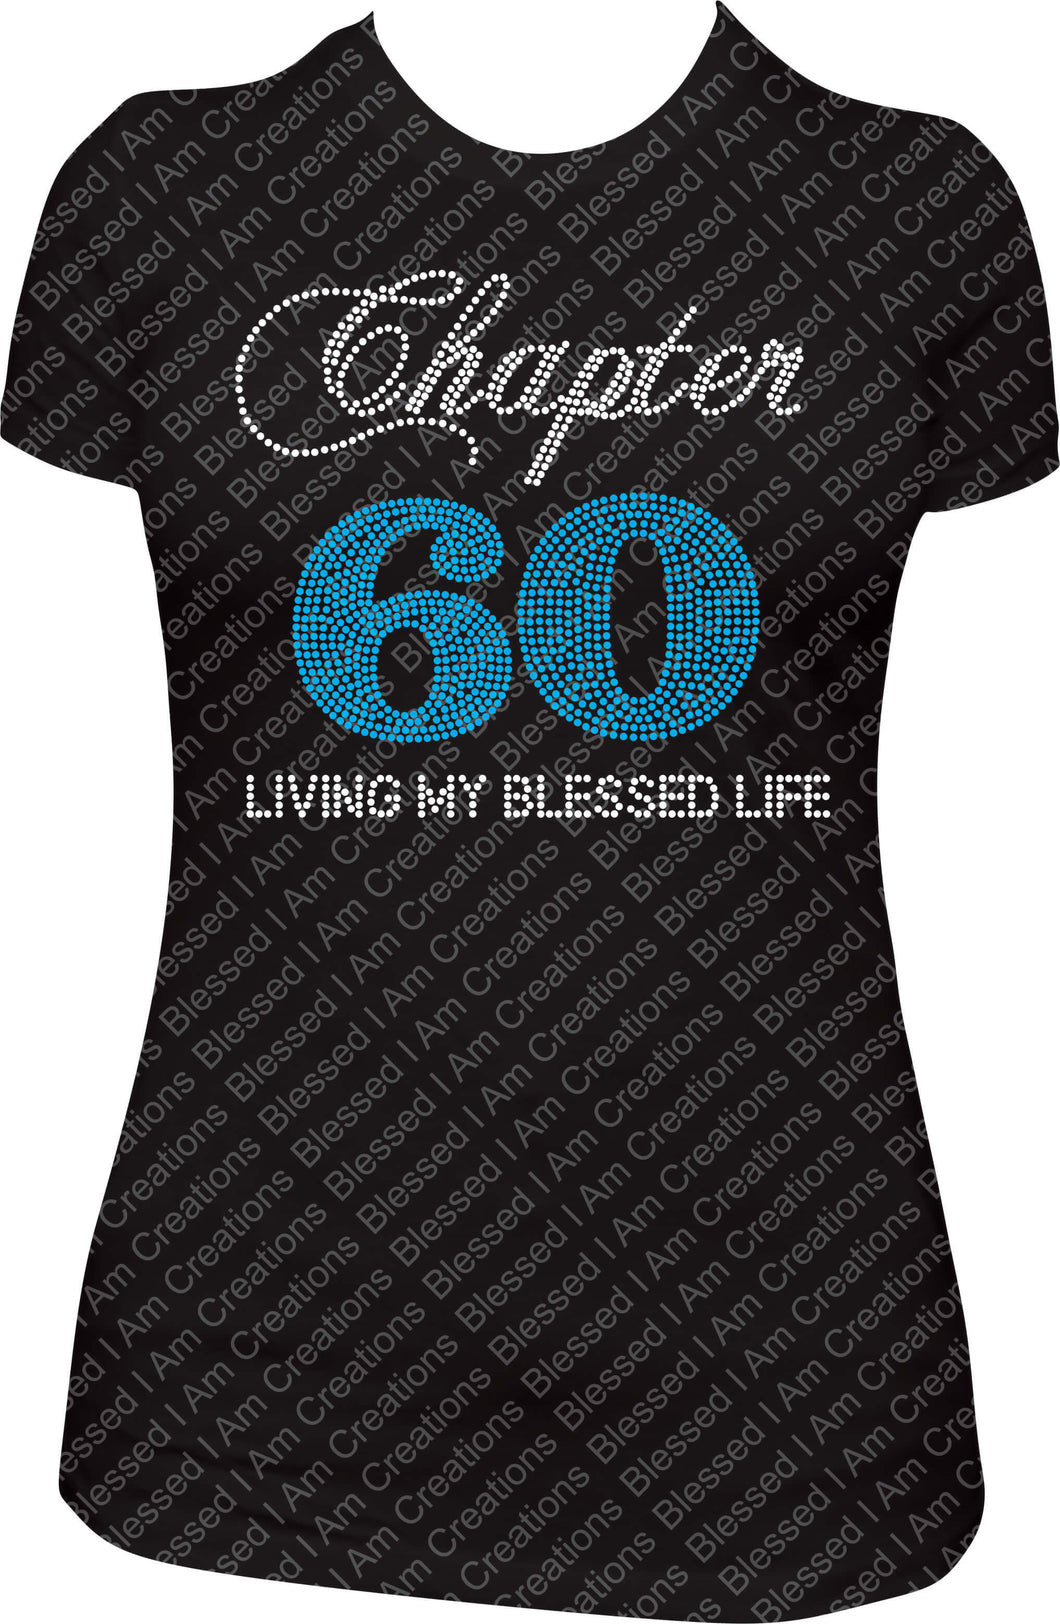 Chapter 60 birthday shirt, bling shirt, rhinestone shirt, living my blessed life shirt, bling shirt, chapter bling shirt, 